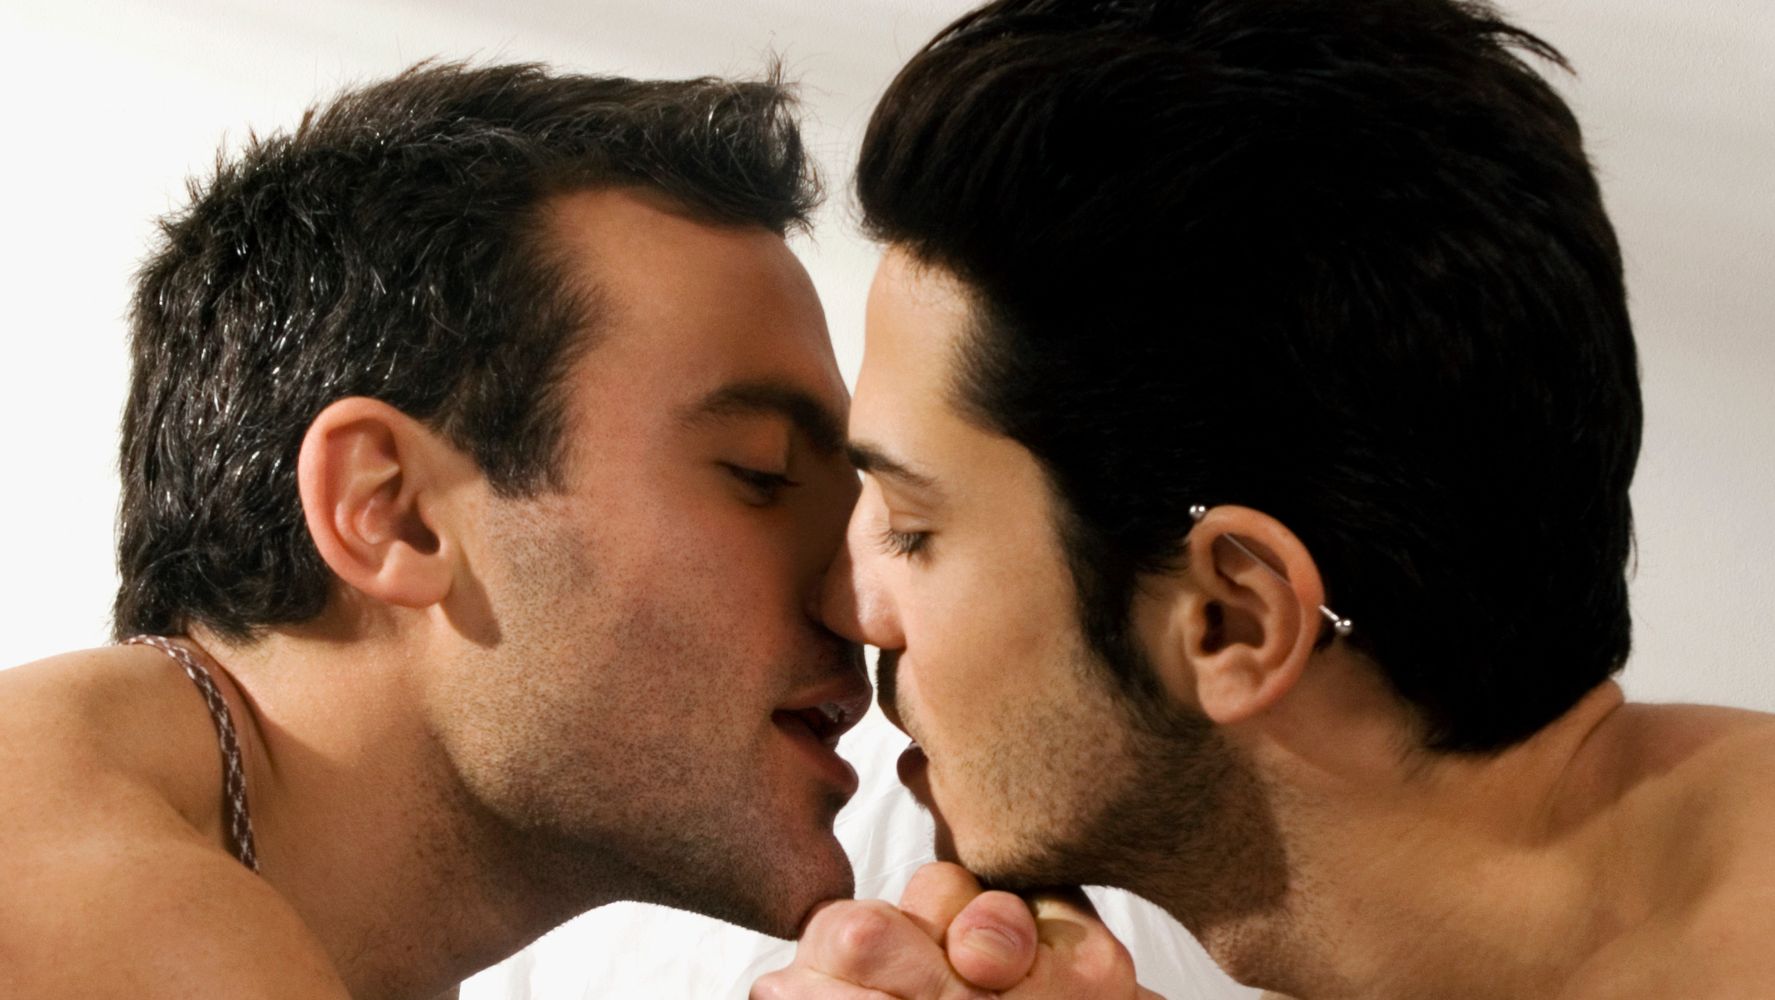 Is brad rutter gay - ðŸ§¡ Shirtless Men On The Blog: Brad Kalvo & Tyler M...